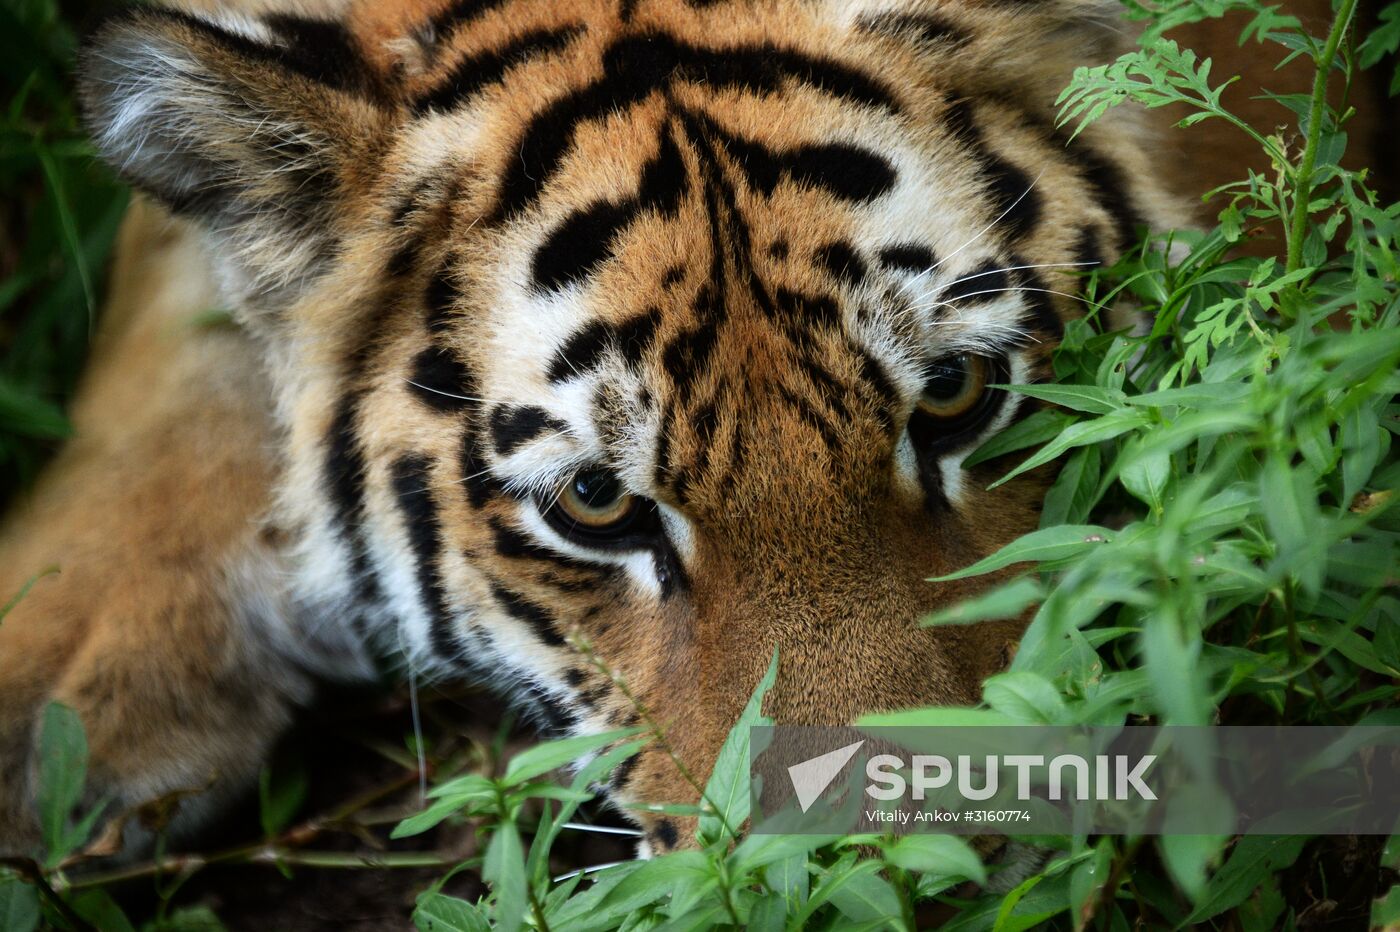 Young tiger Sherkhan and Tabaki dog in Primorye Safari Park